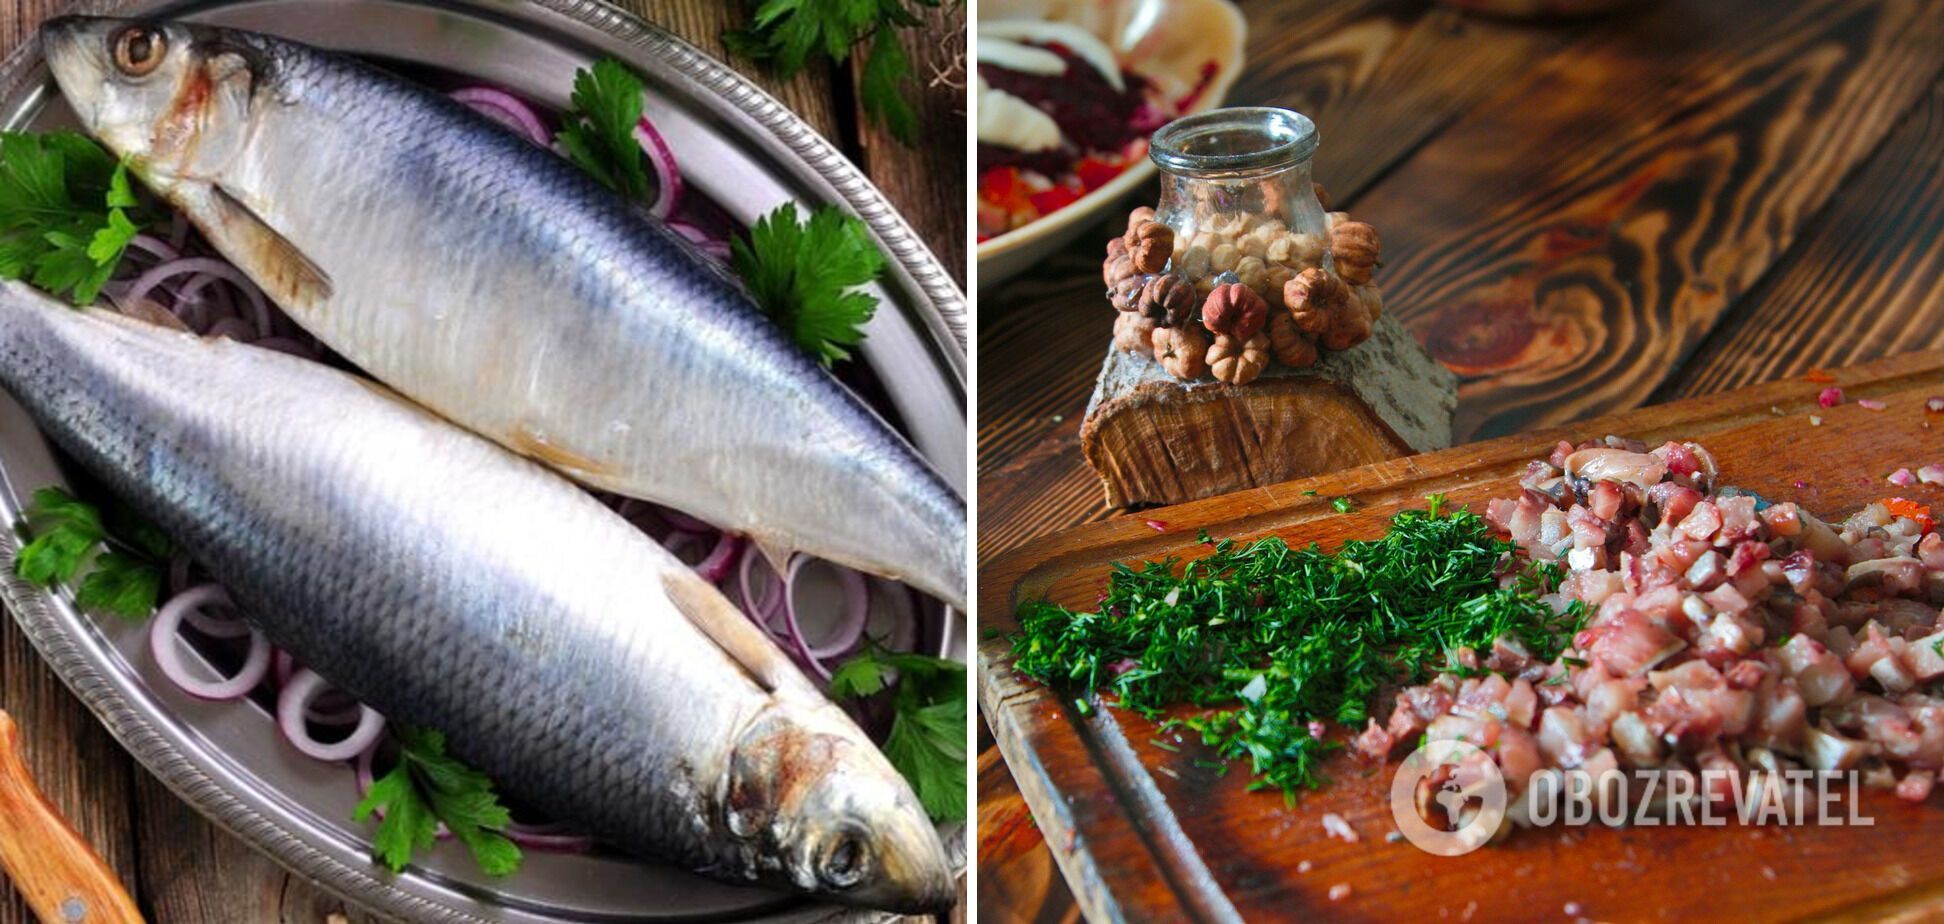 The benefits of herring